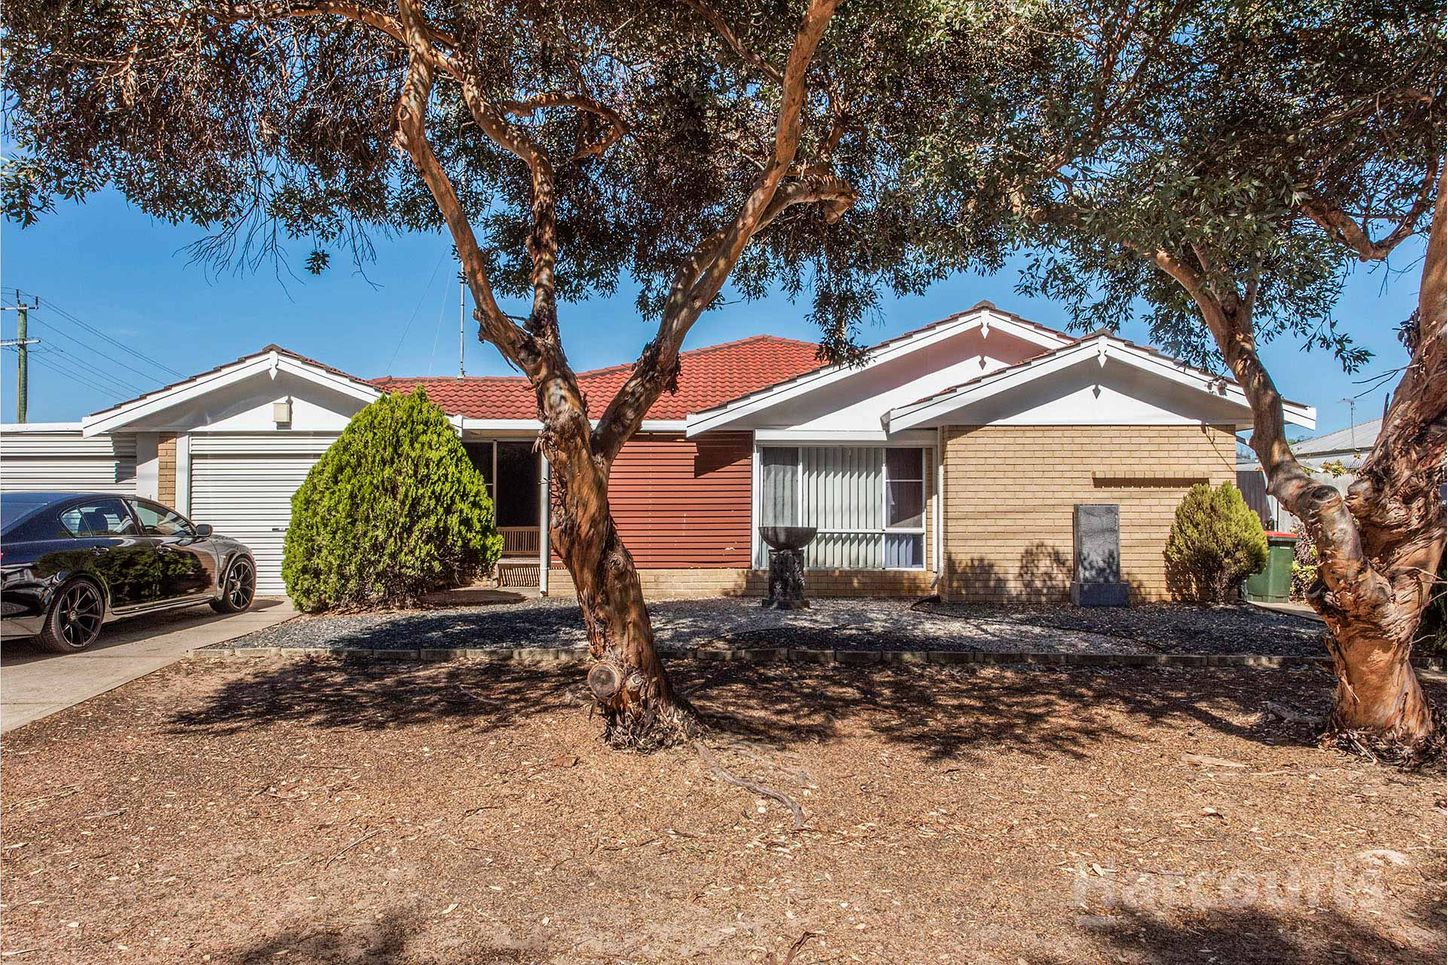 Prop-GPT: House: Perth - South West, WA Golden Bay, Brand, WA 6174 Western Australia 6174